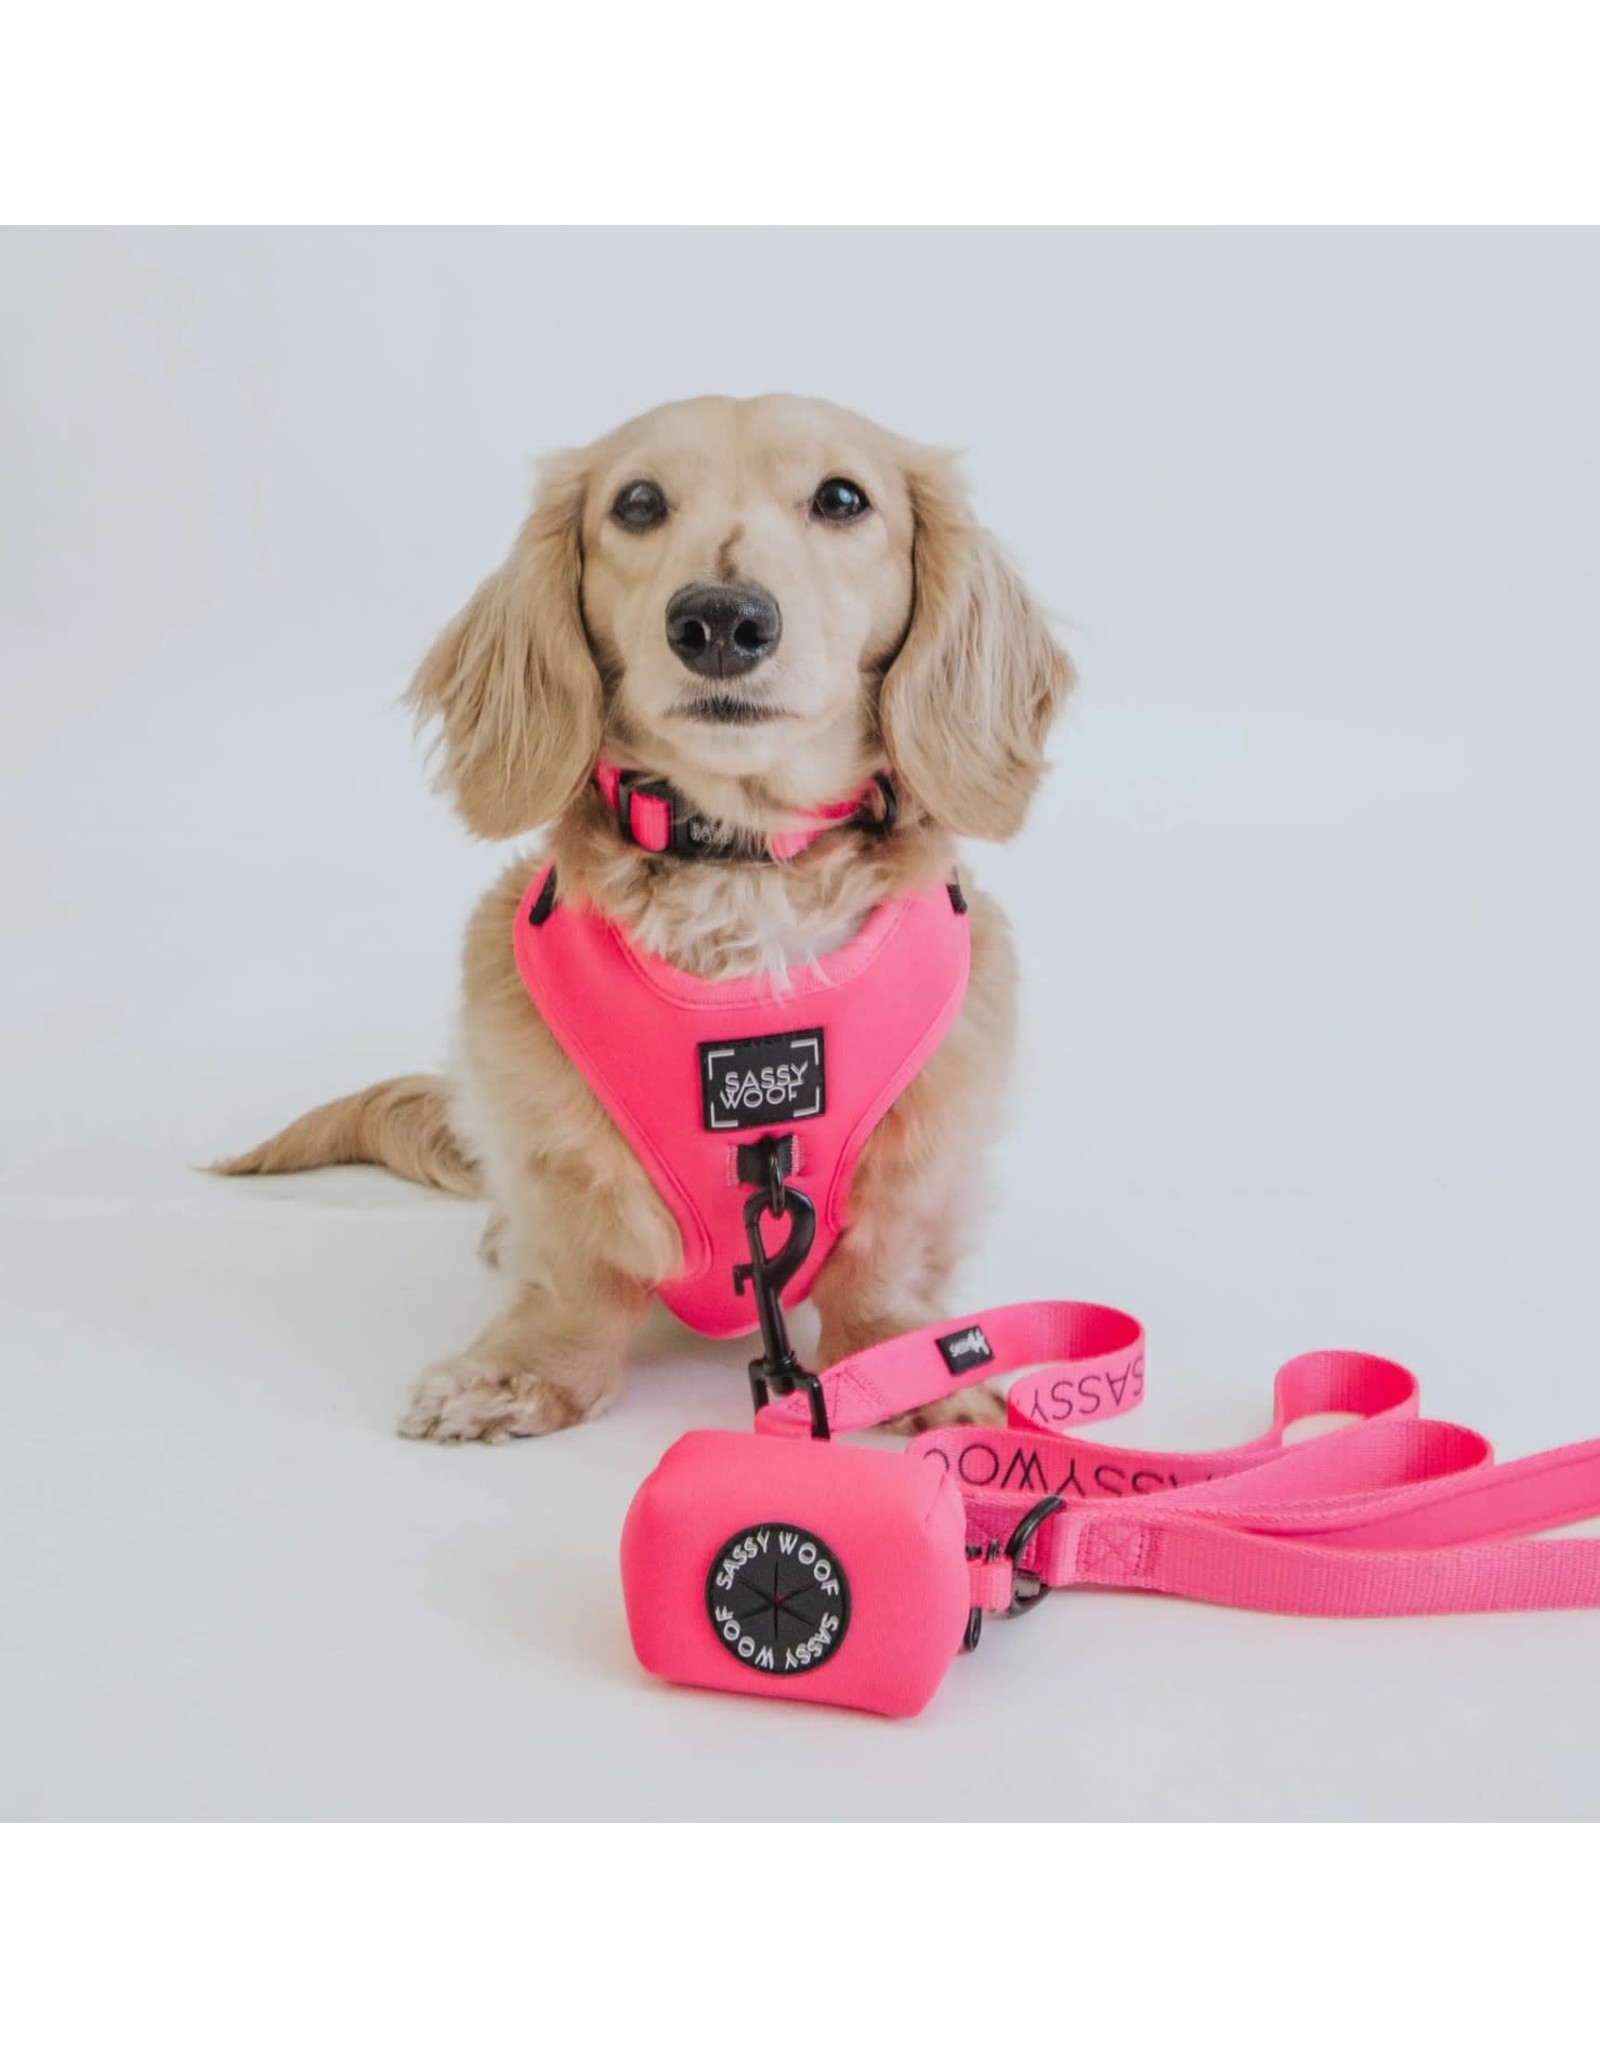 Sassy Woof 'Neon Pink' Dog Waste Bag Holder